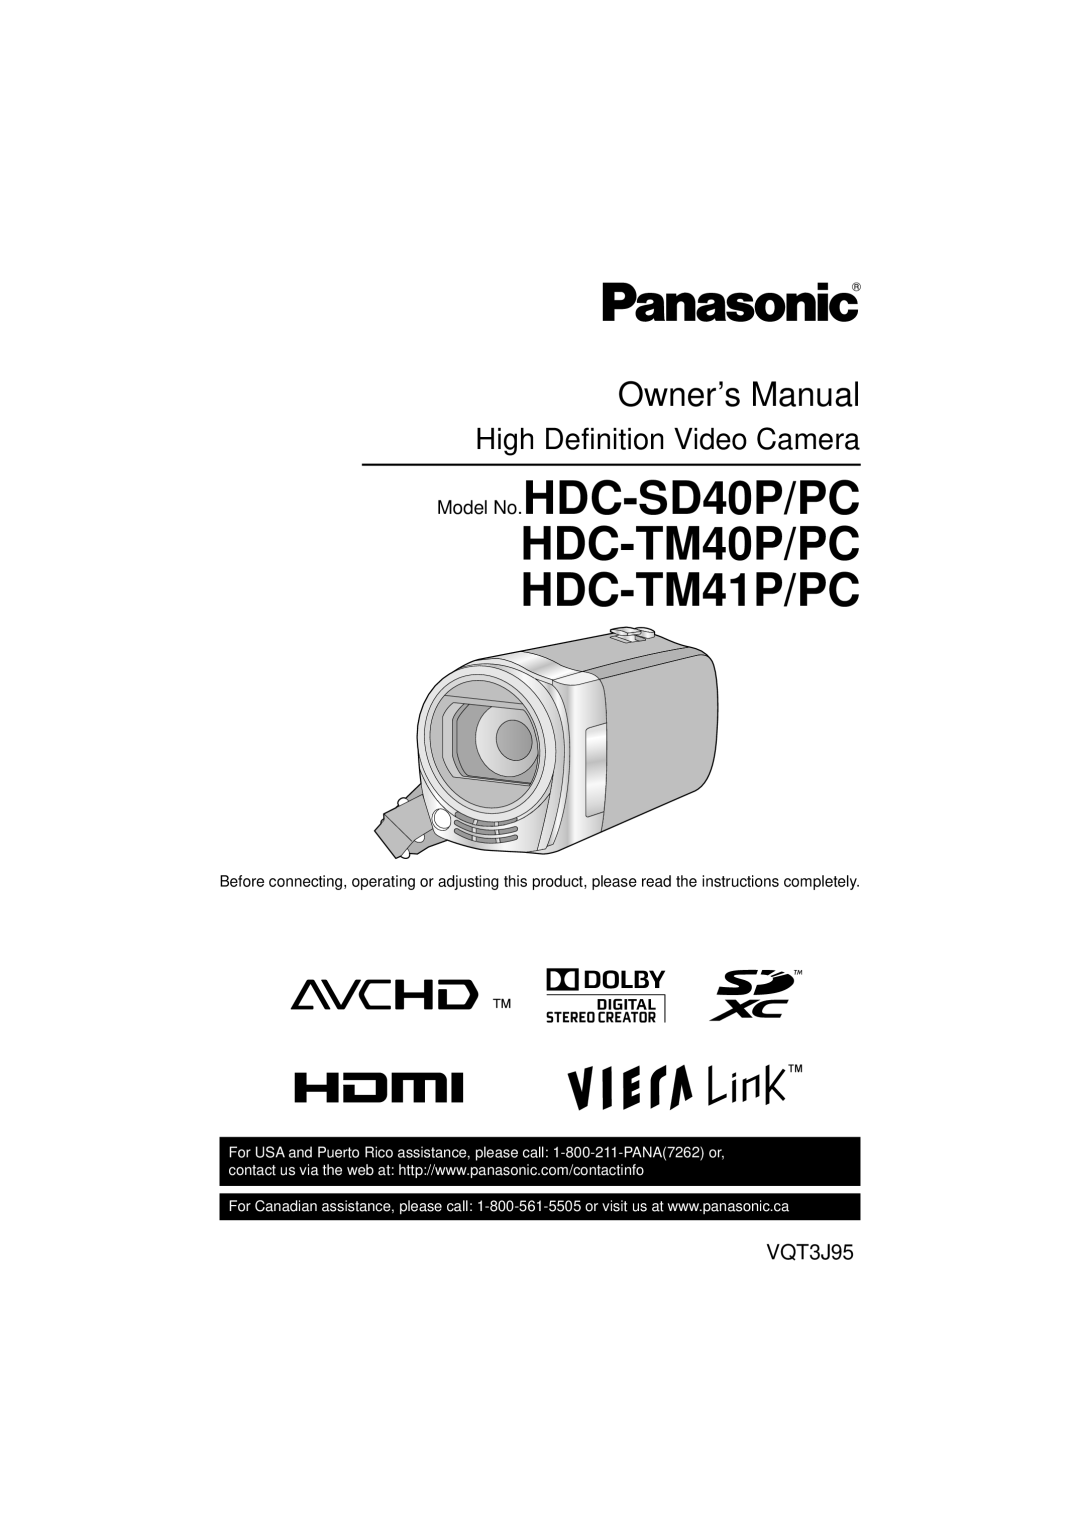 Panasonic owner manual VQT3J95, Model No.HDC-SD40P/PC HDC-TM40P/PC HDC-TM41P/PC, Owner’s Manual 